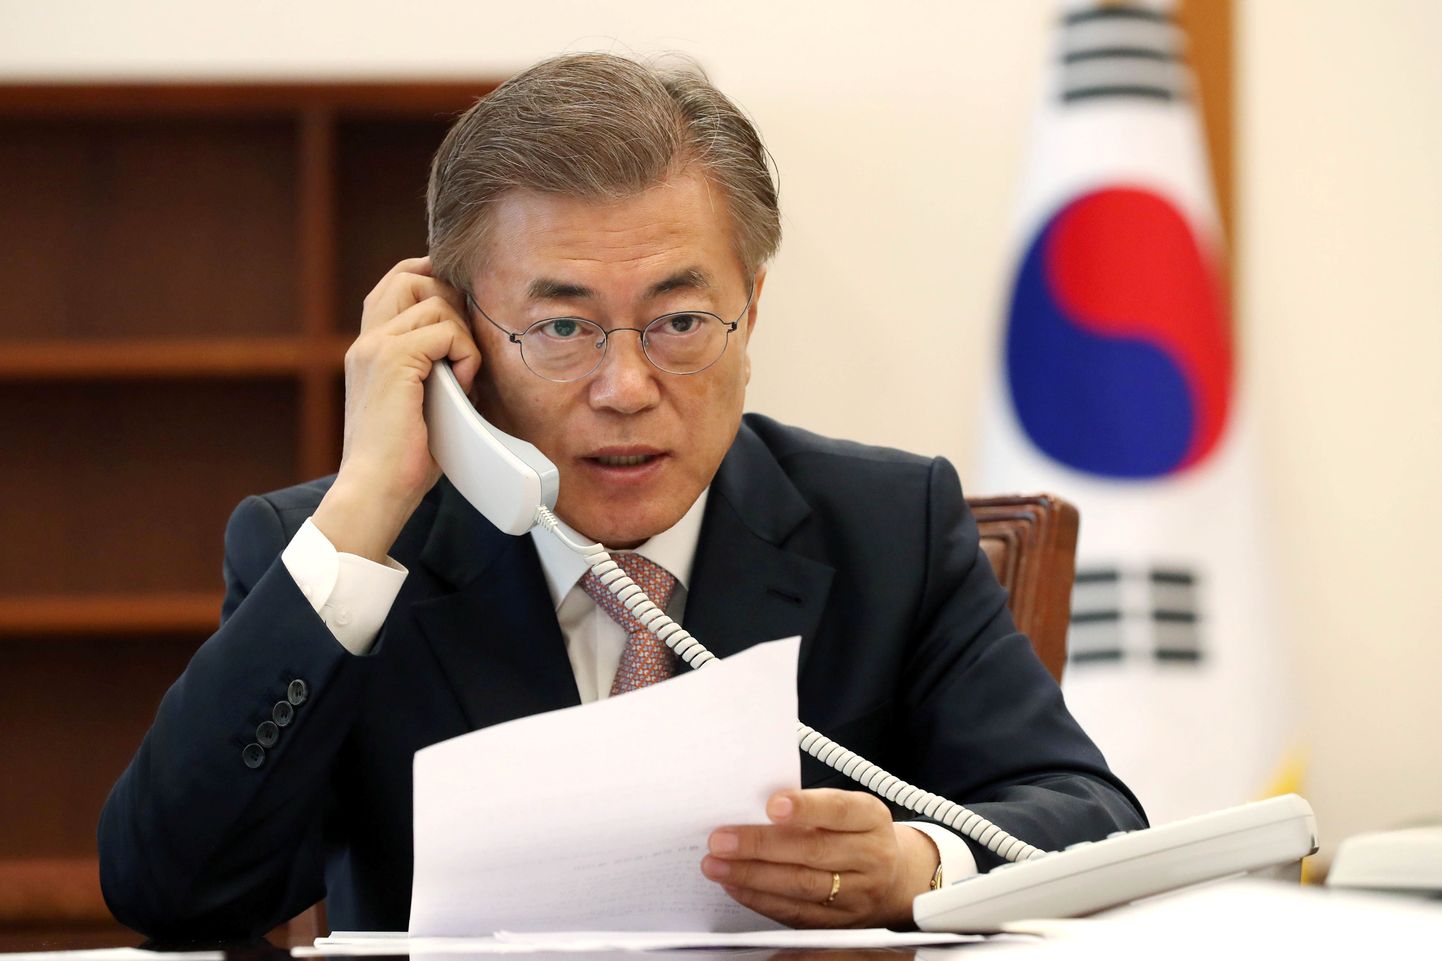 Lõuna-Korea vastne president Moon Jae-in  vestlemas telefonitsi Hiina ametivenna Xi Jinpingiga.